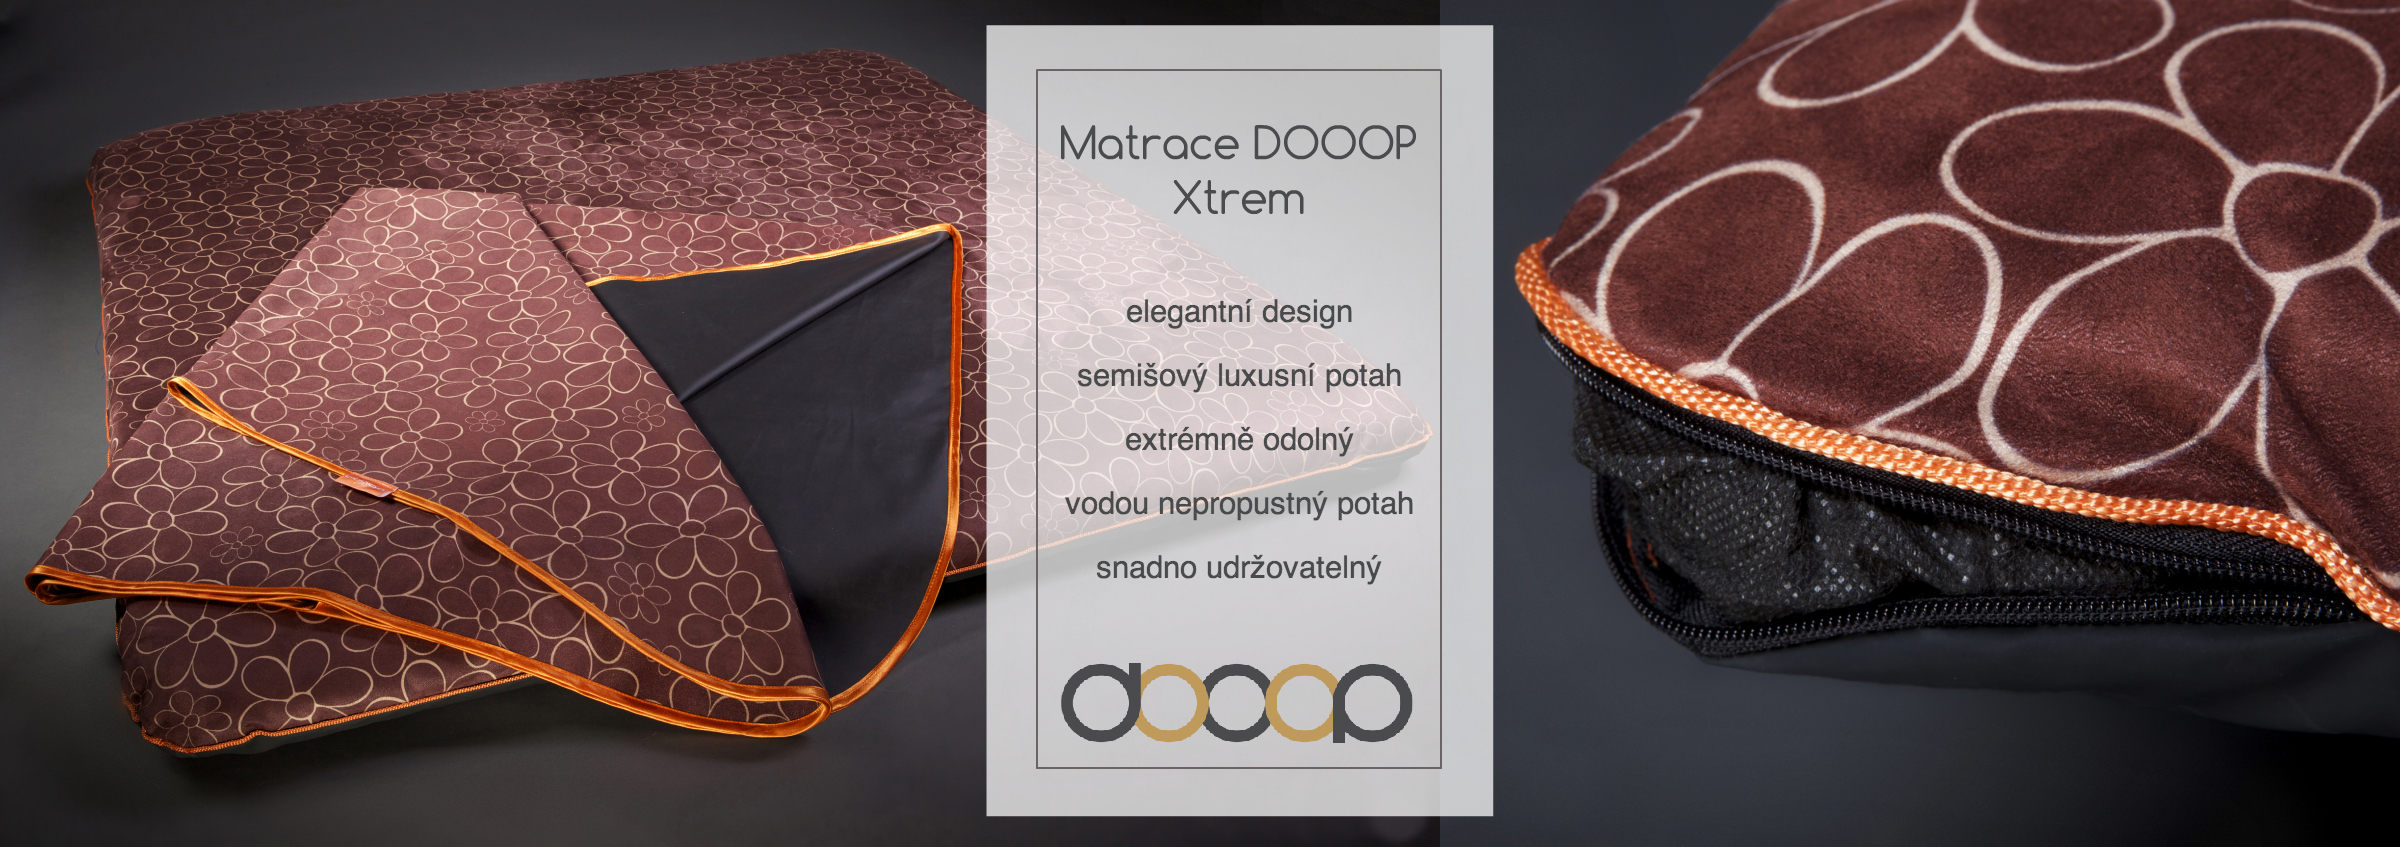 dooop-cover-matrace-xtream